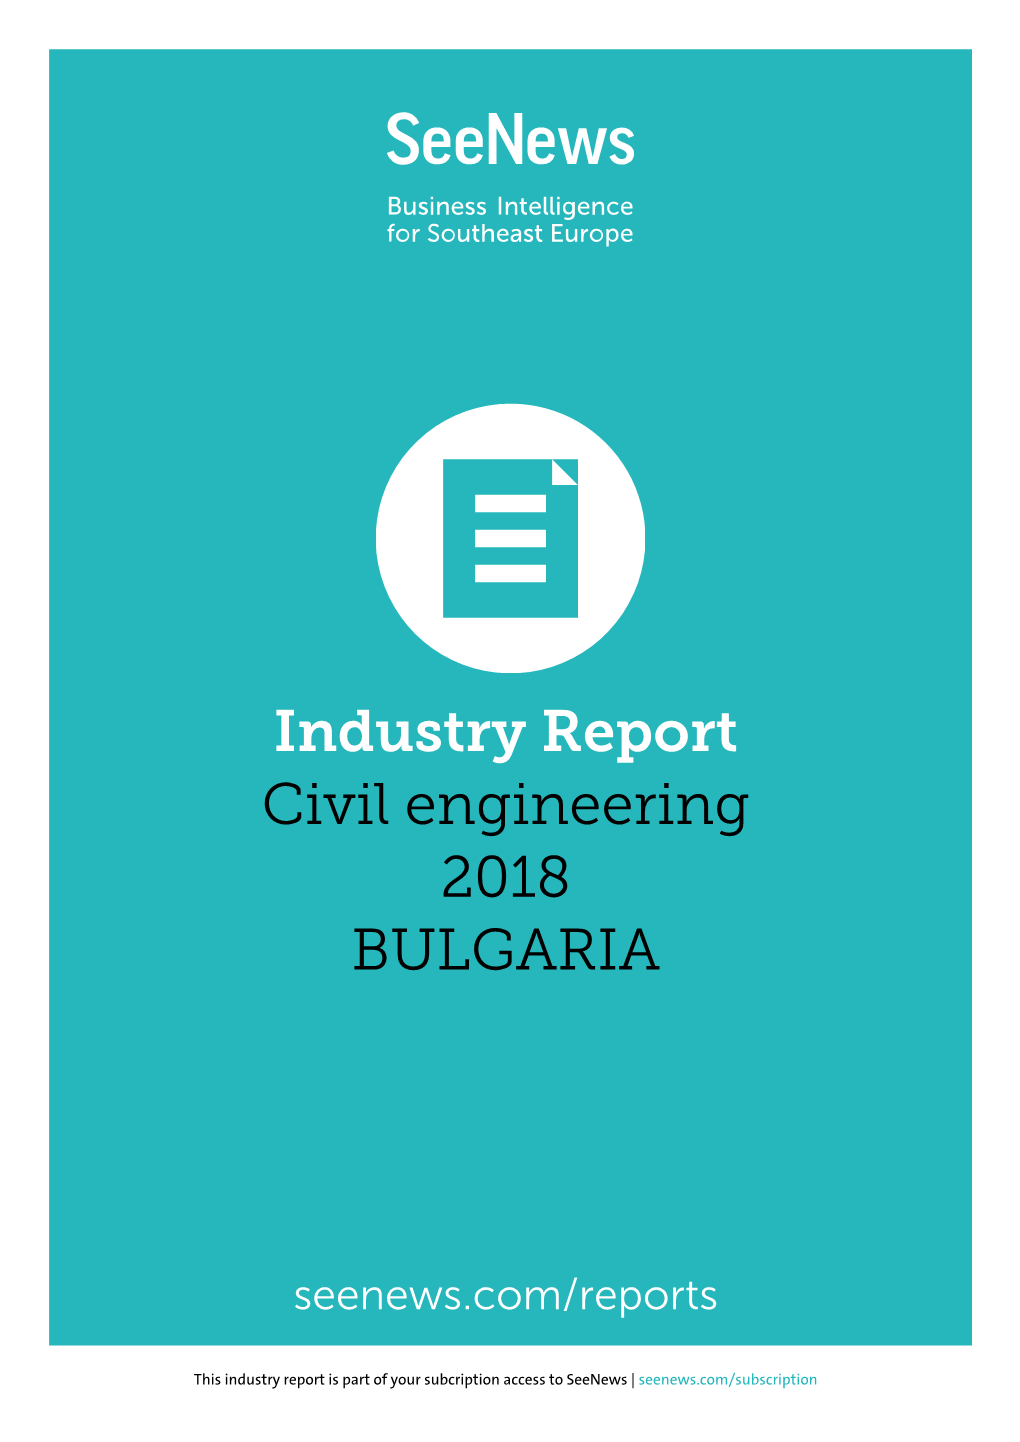 Industry Report Civil Engineering 2018 BULGARIA